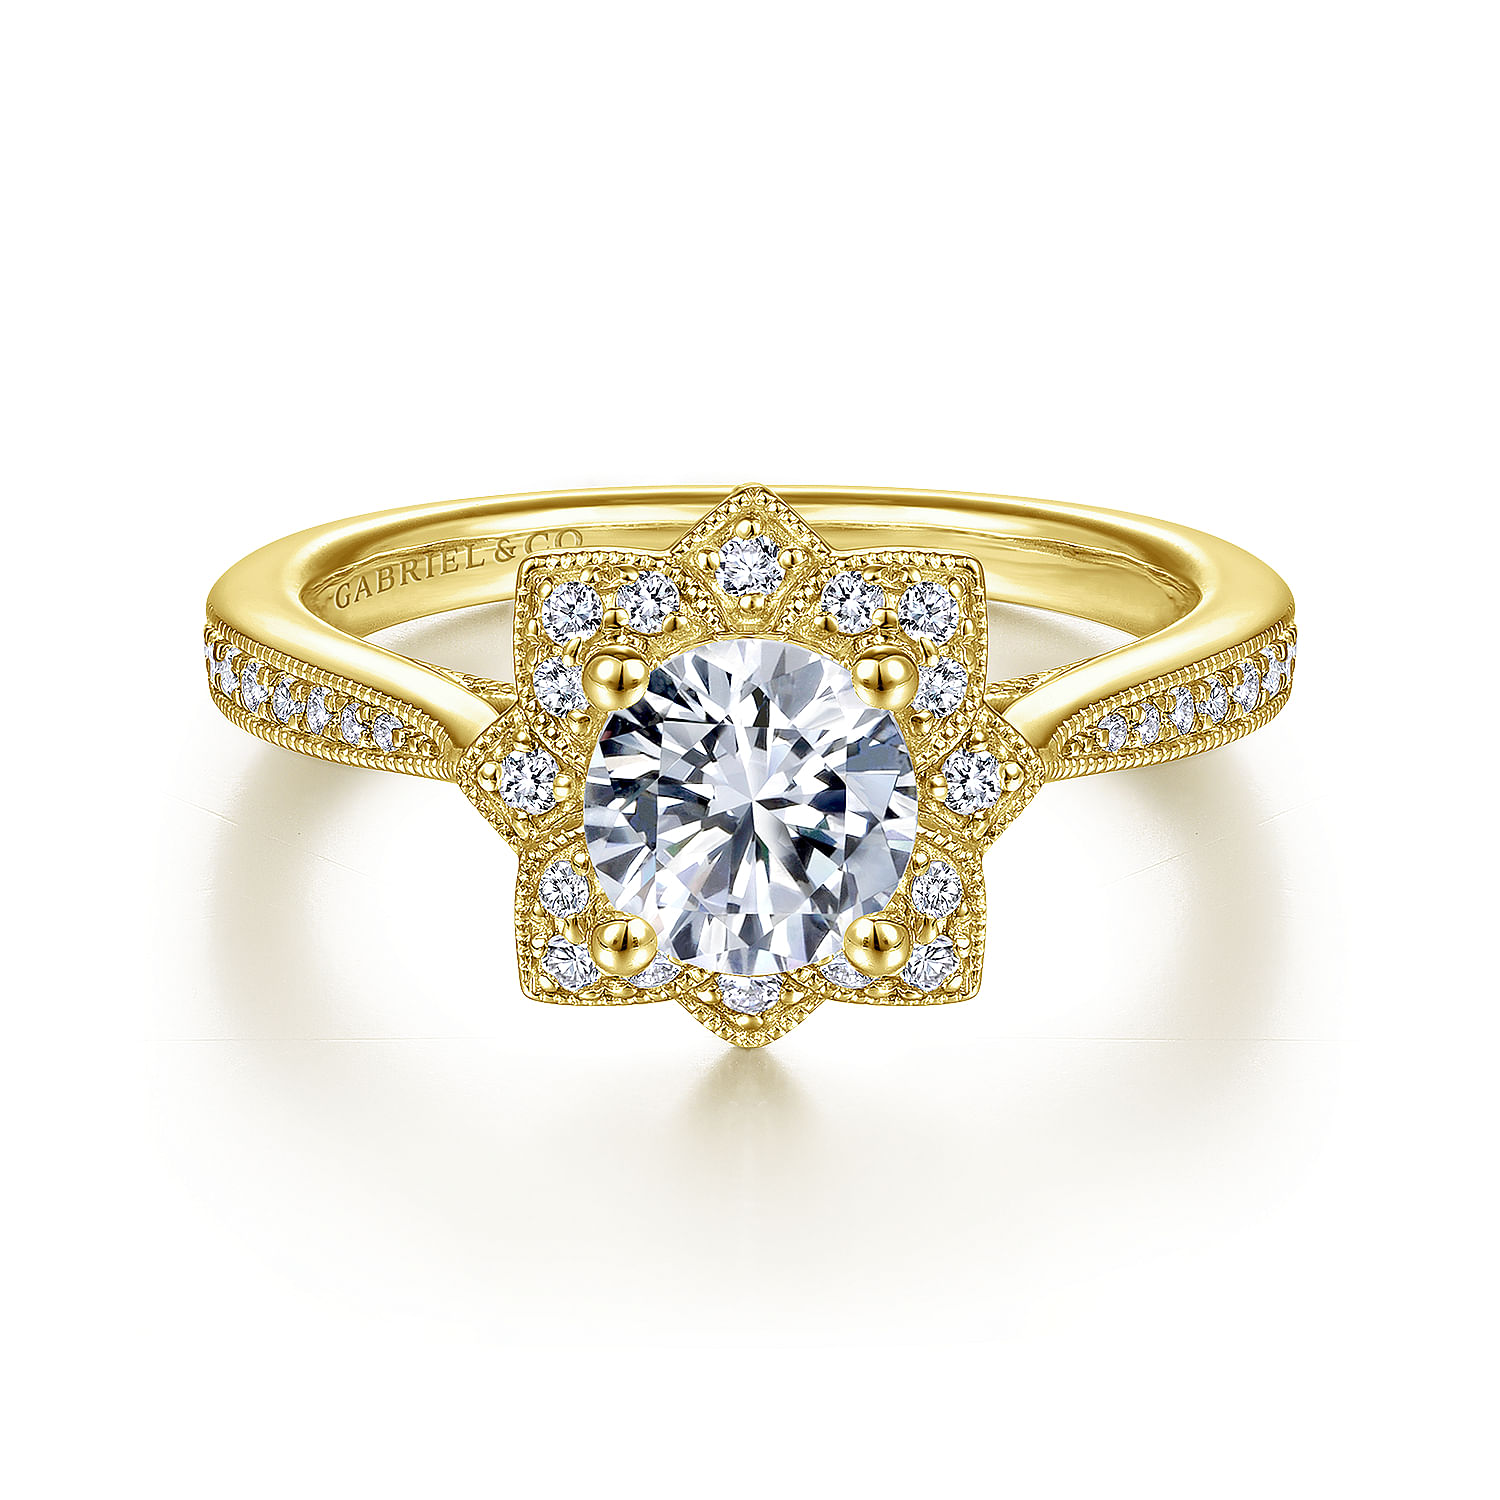 Gretel - Unique 14K Yellow Gold Vintage Inspired Halo Diamond Engagement Ring